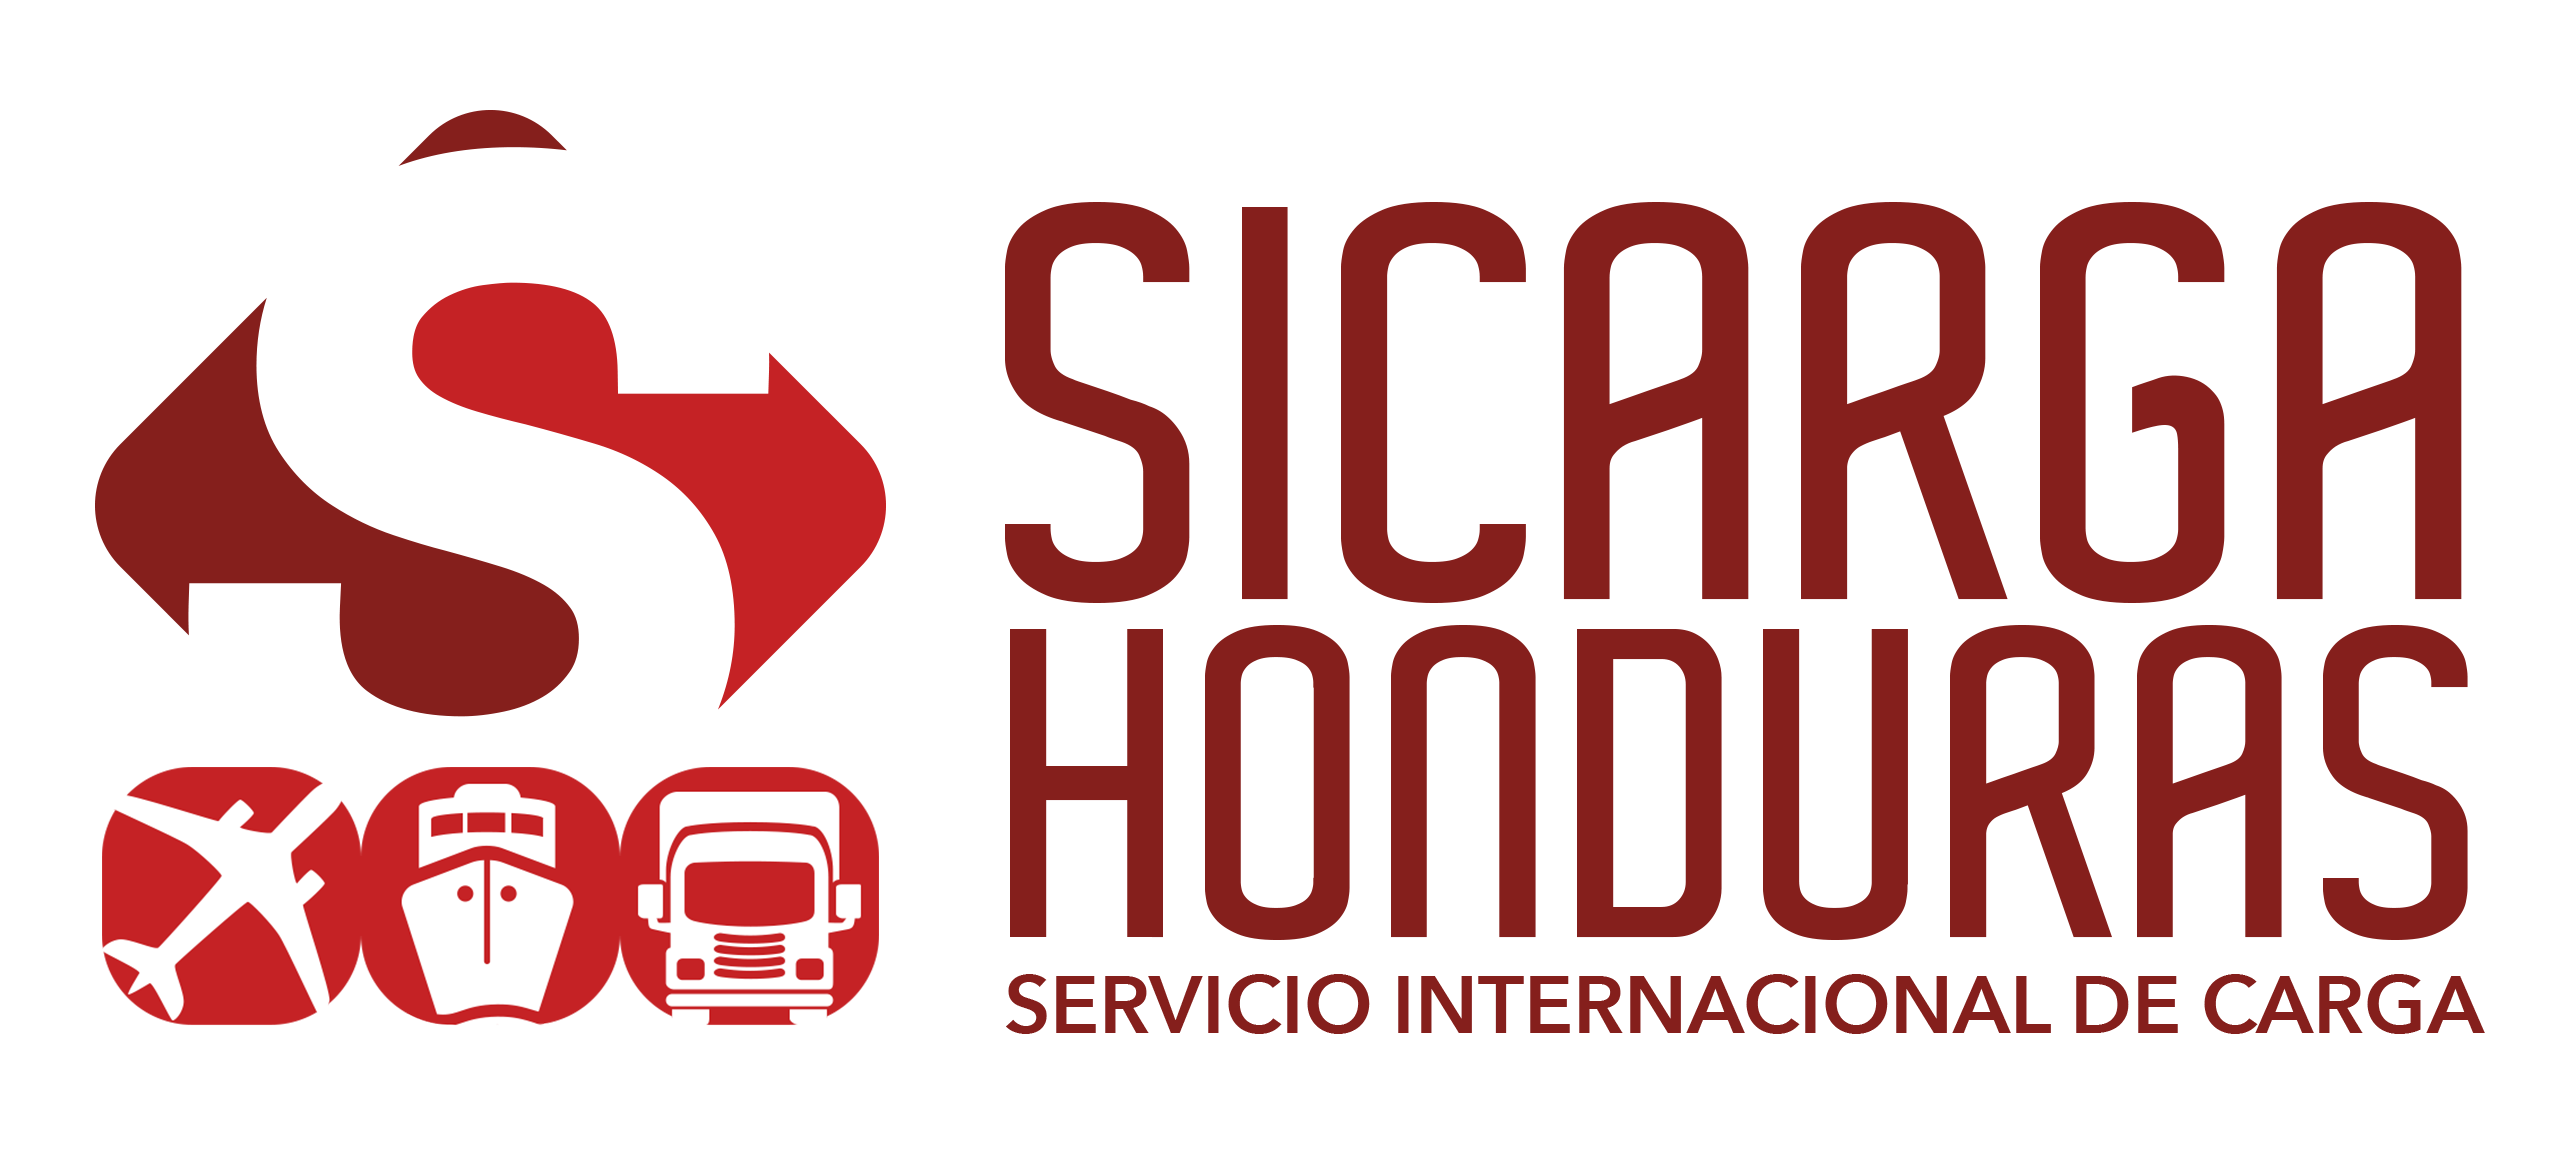 Logo of Sicarga, Honduras